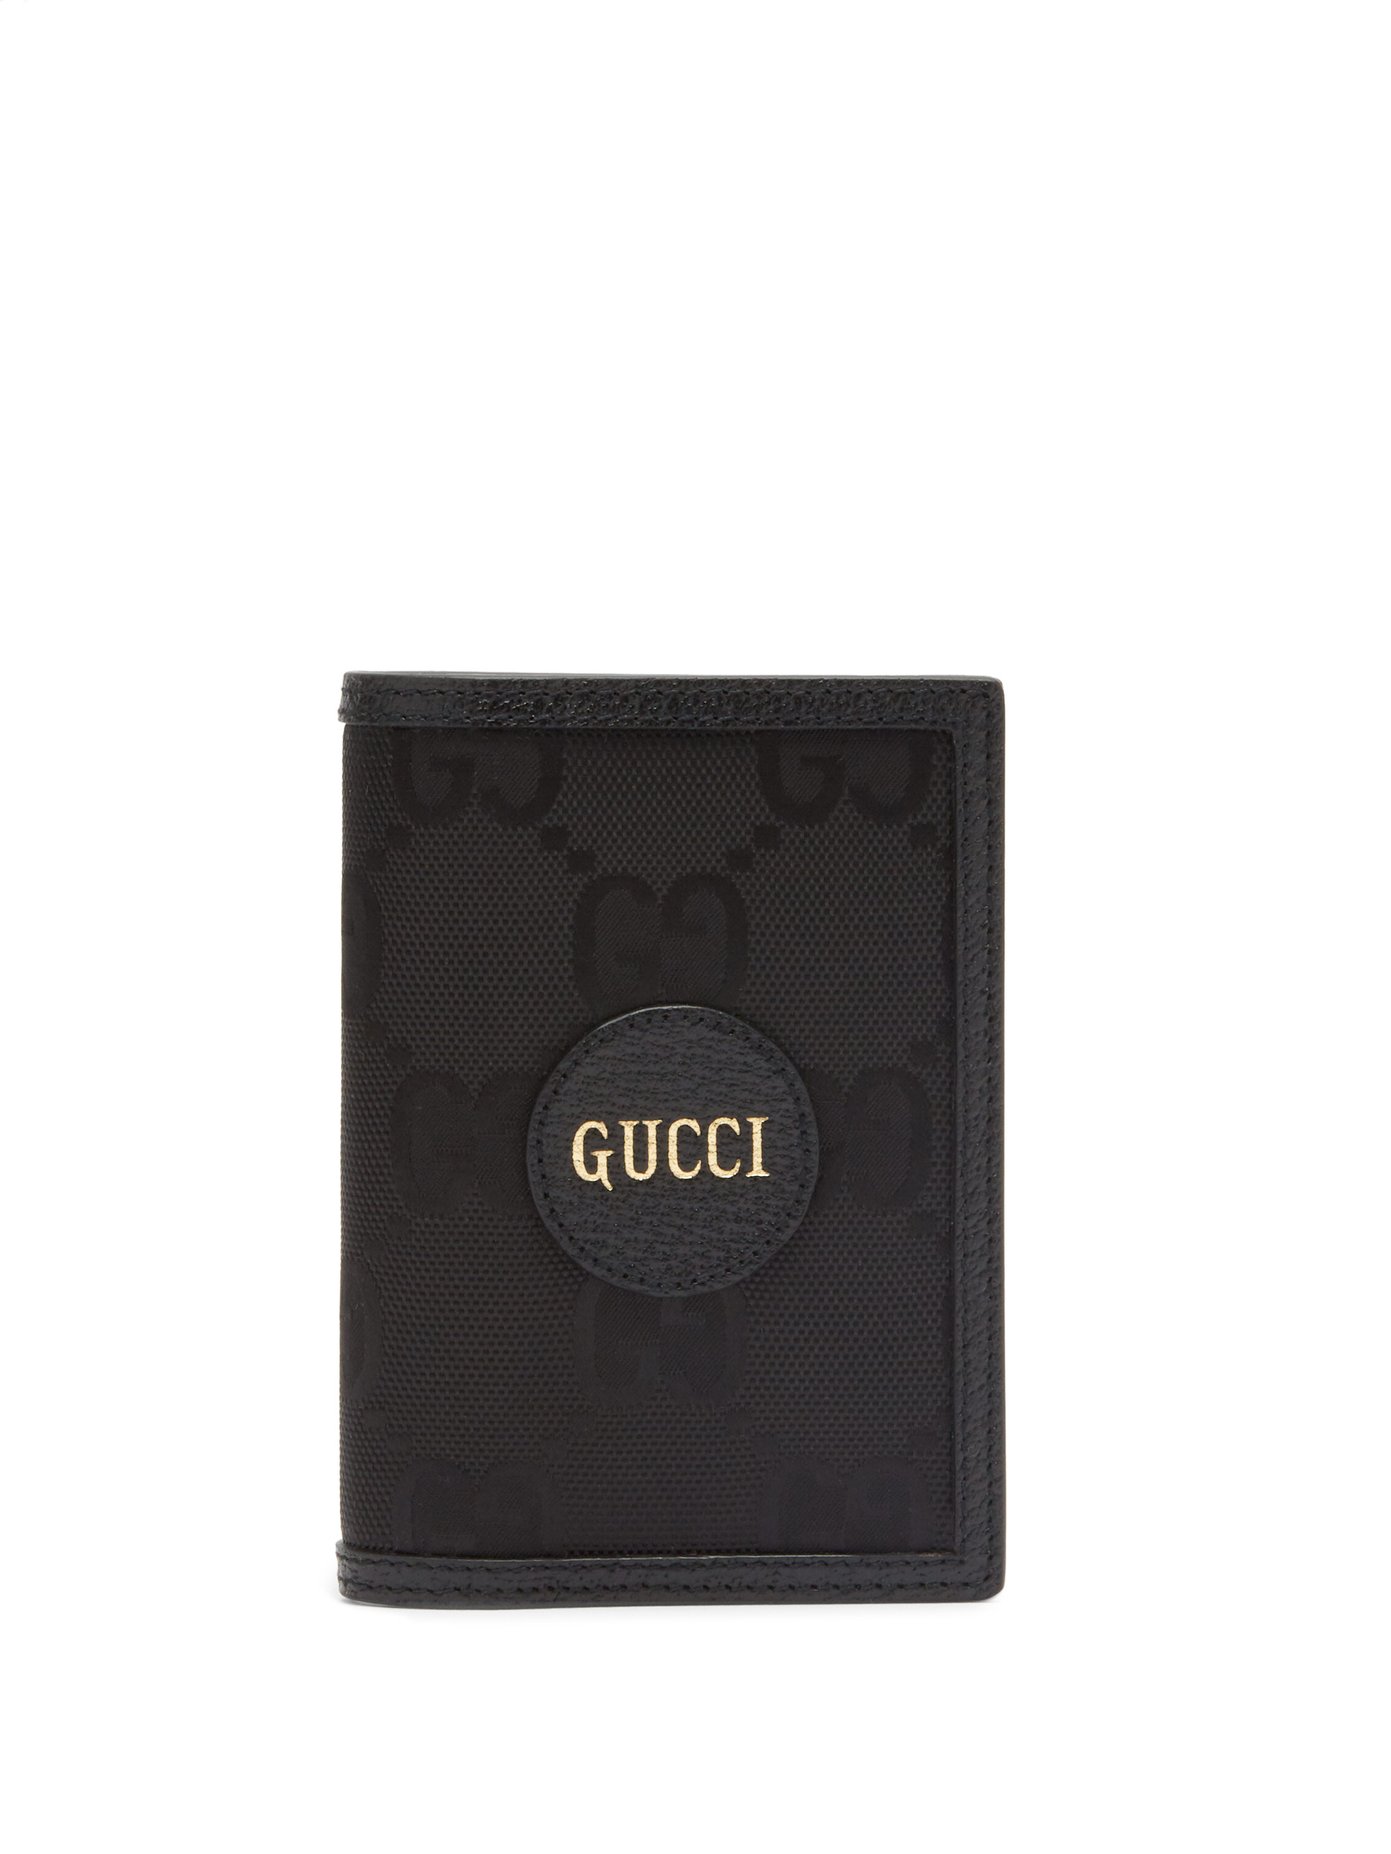 gucci passport wallet